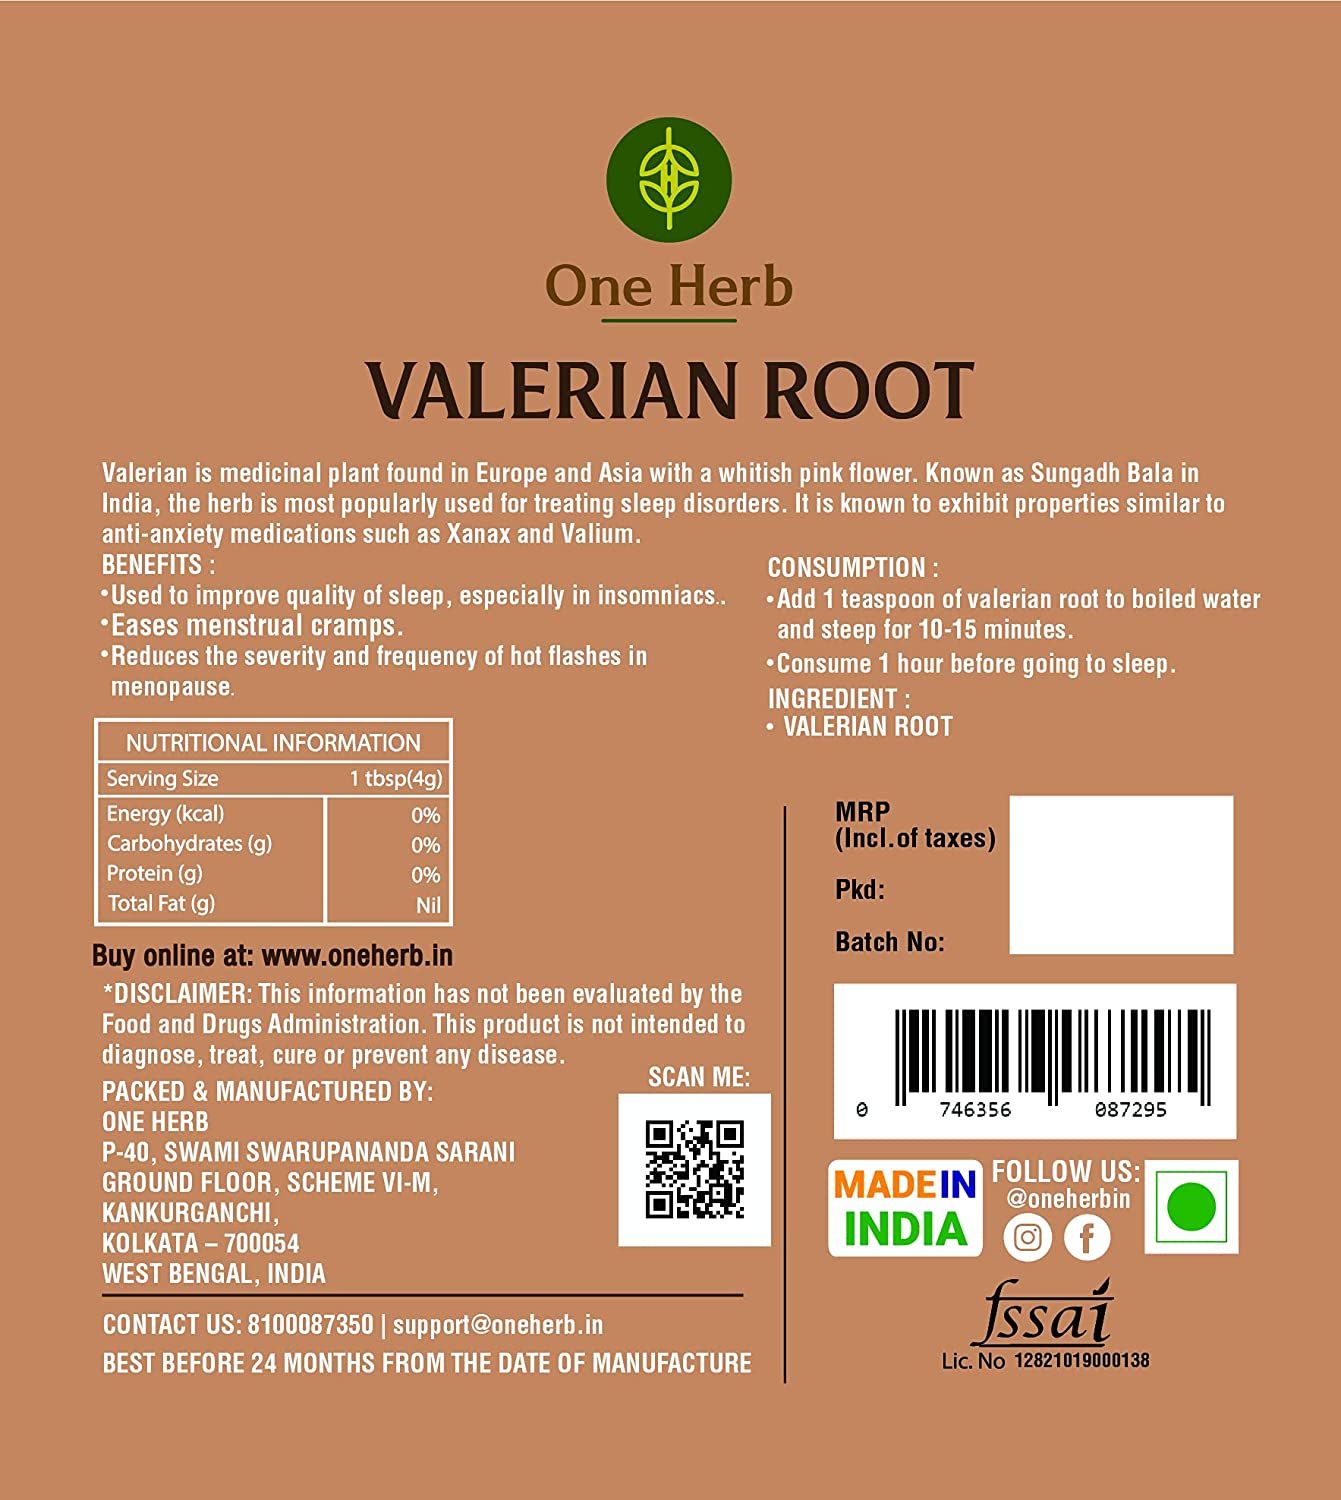 One Herb Valerian Root Tea Image